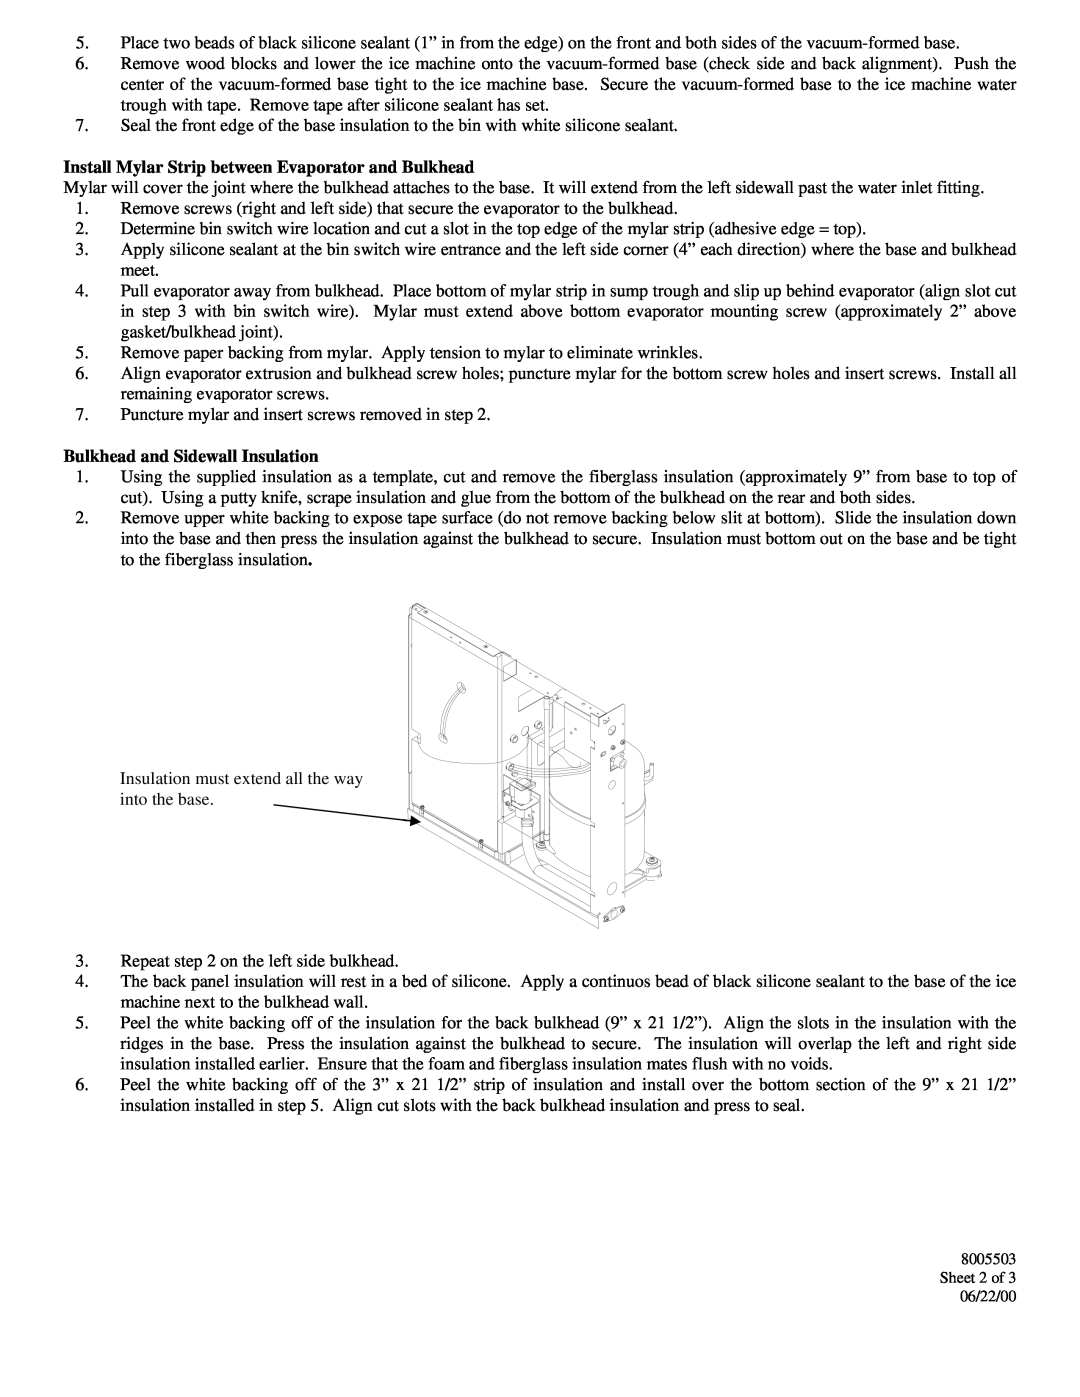 Manitowoc Ice Q-0420, Q-0320 installation instructions Bulkhead and Sidewall Insulation 